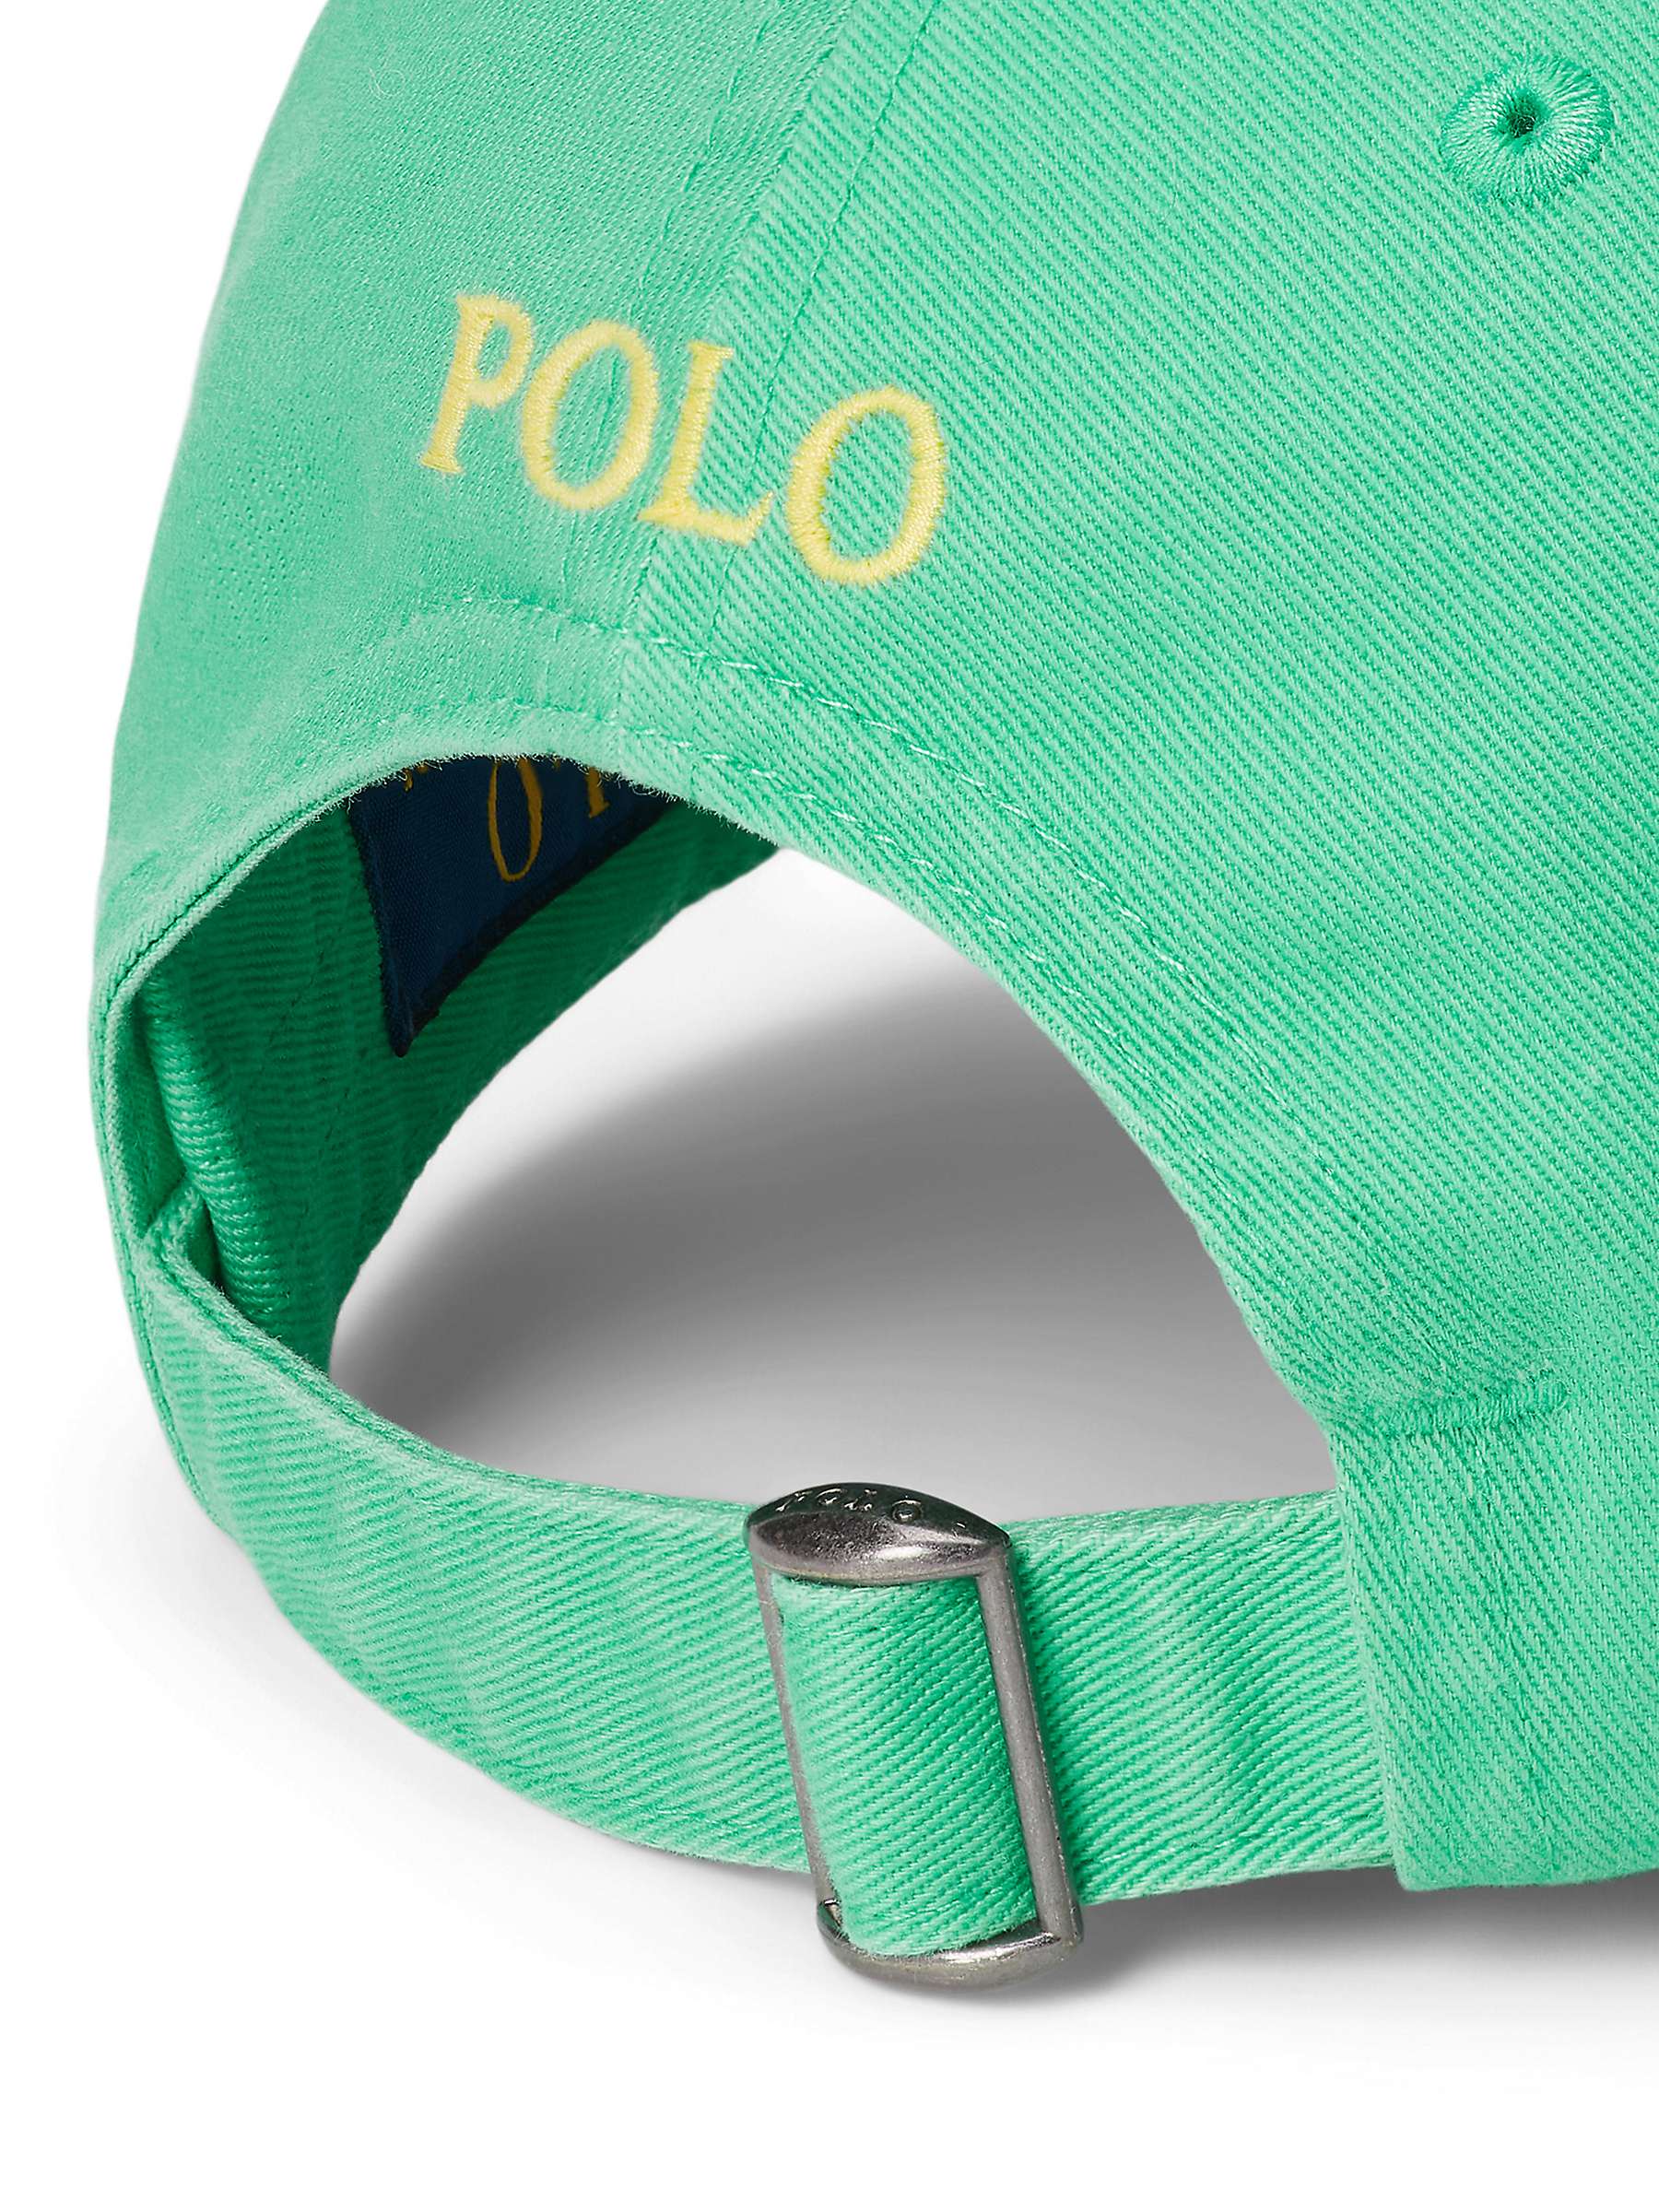 Buy Polo Ralph Lauren Cotton Chino Cap Online at johnlewis.com